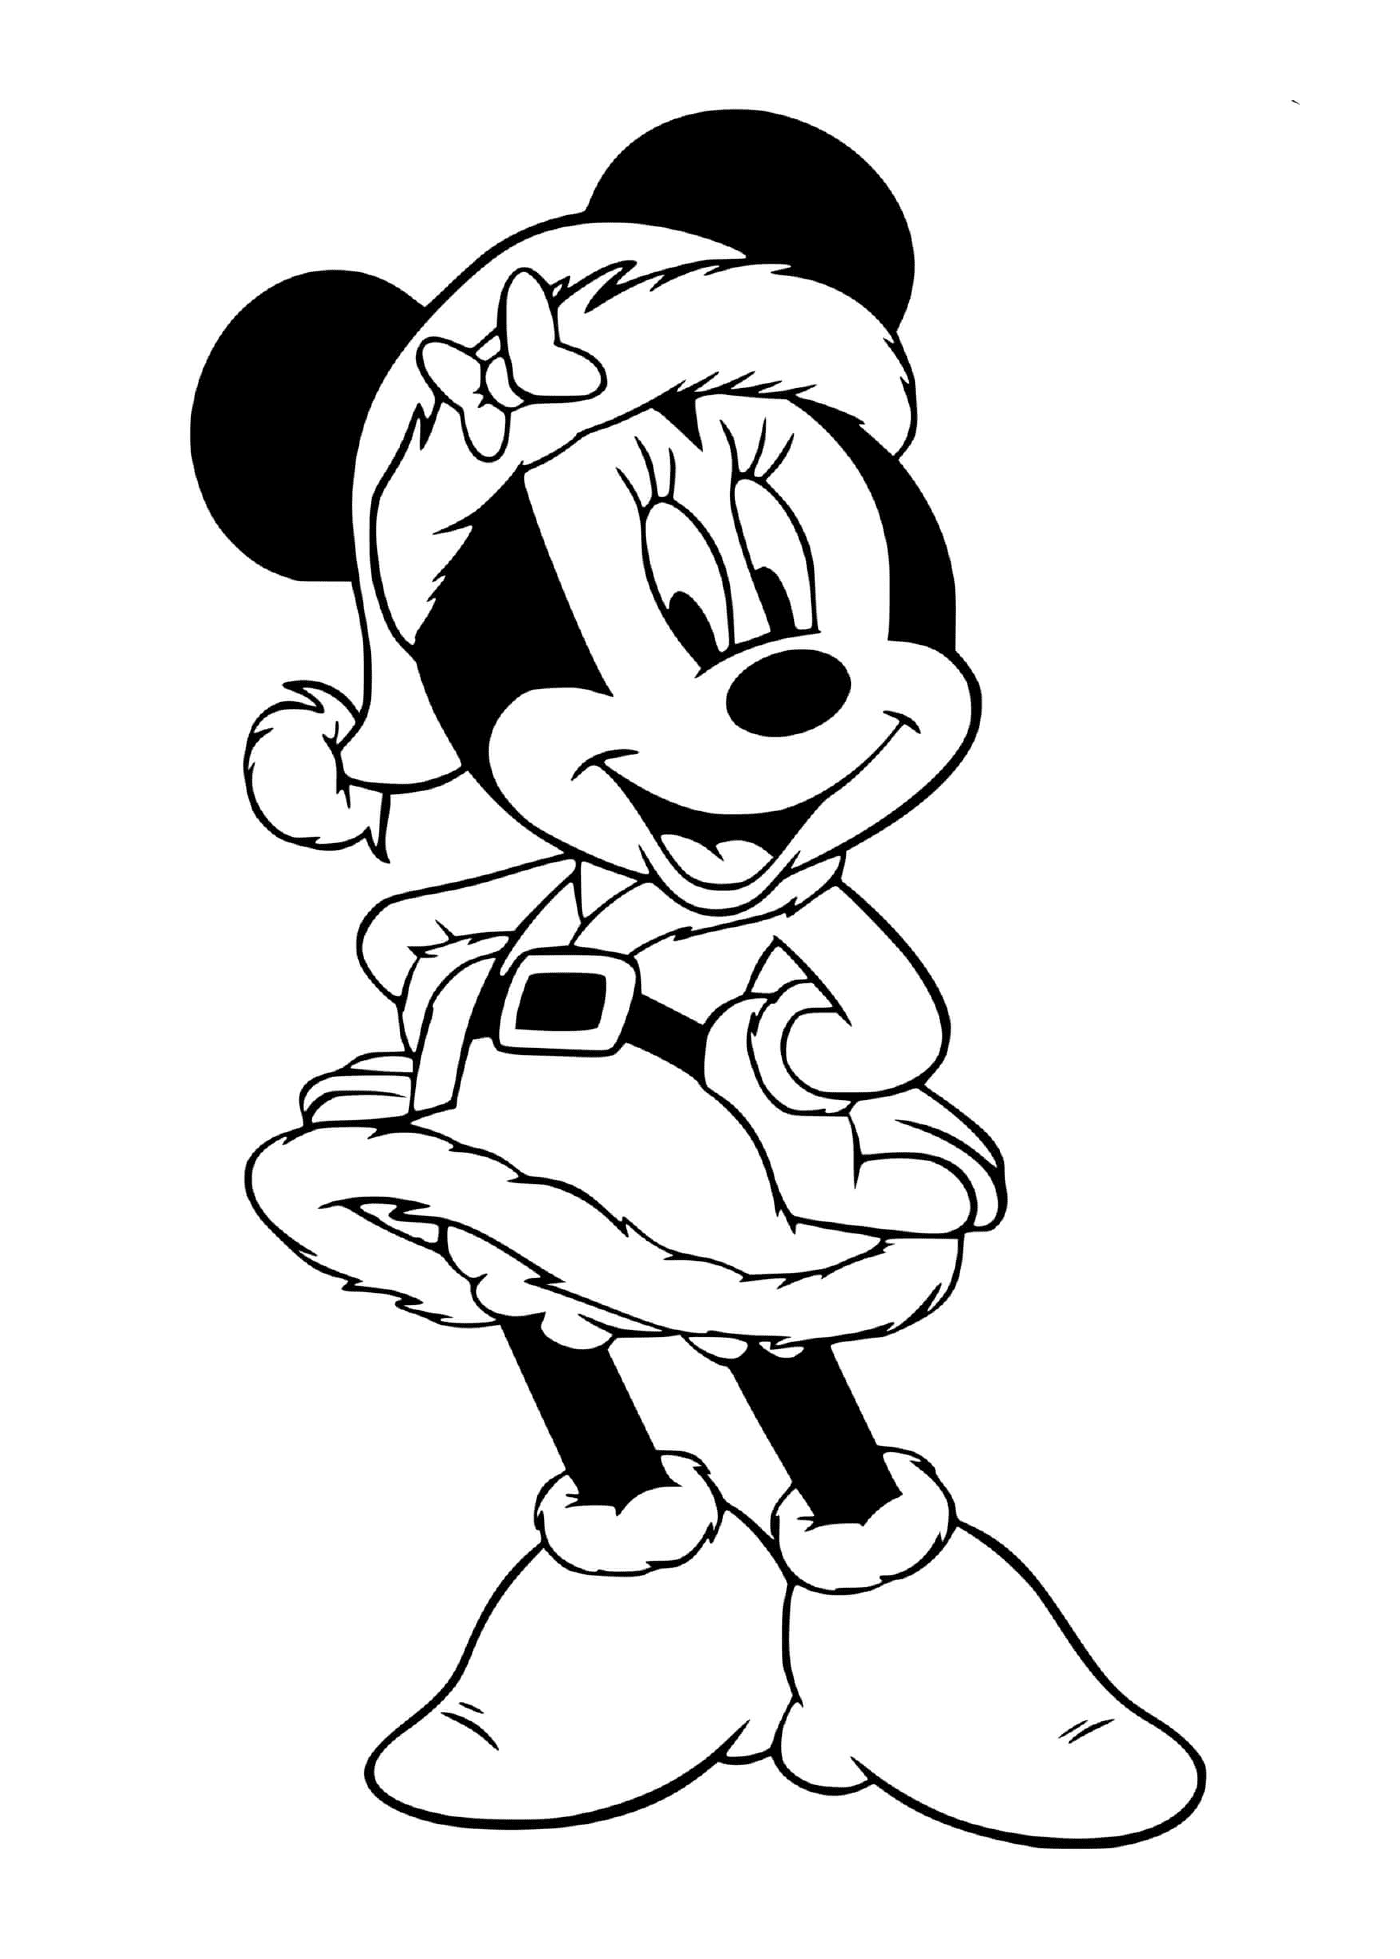  Minnie with a Santa's hat 